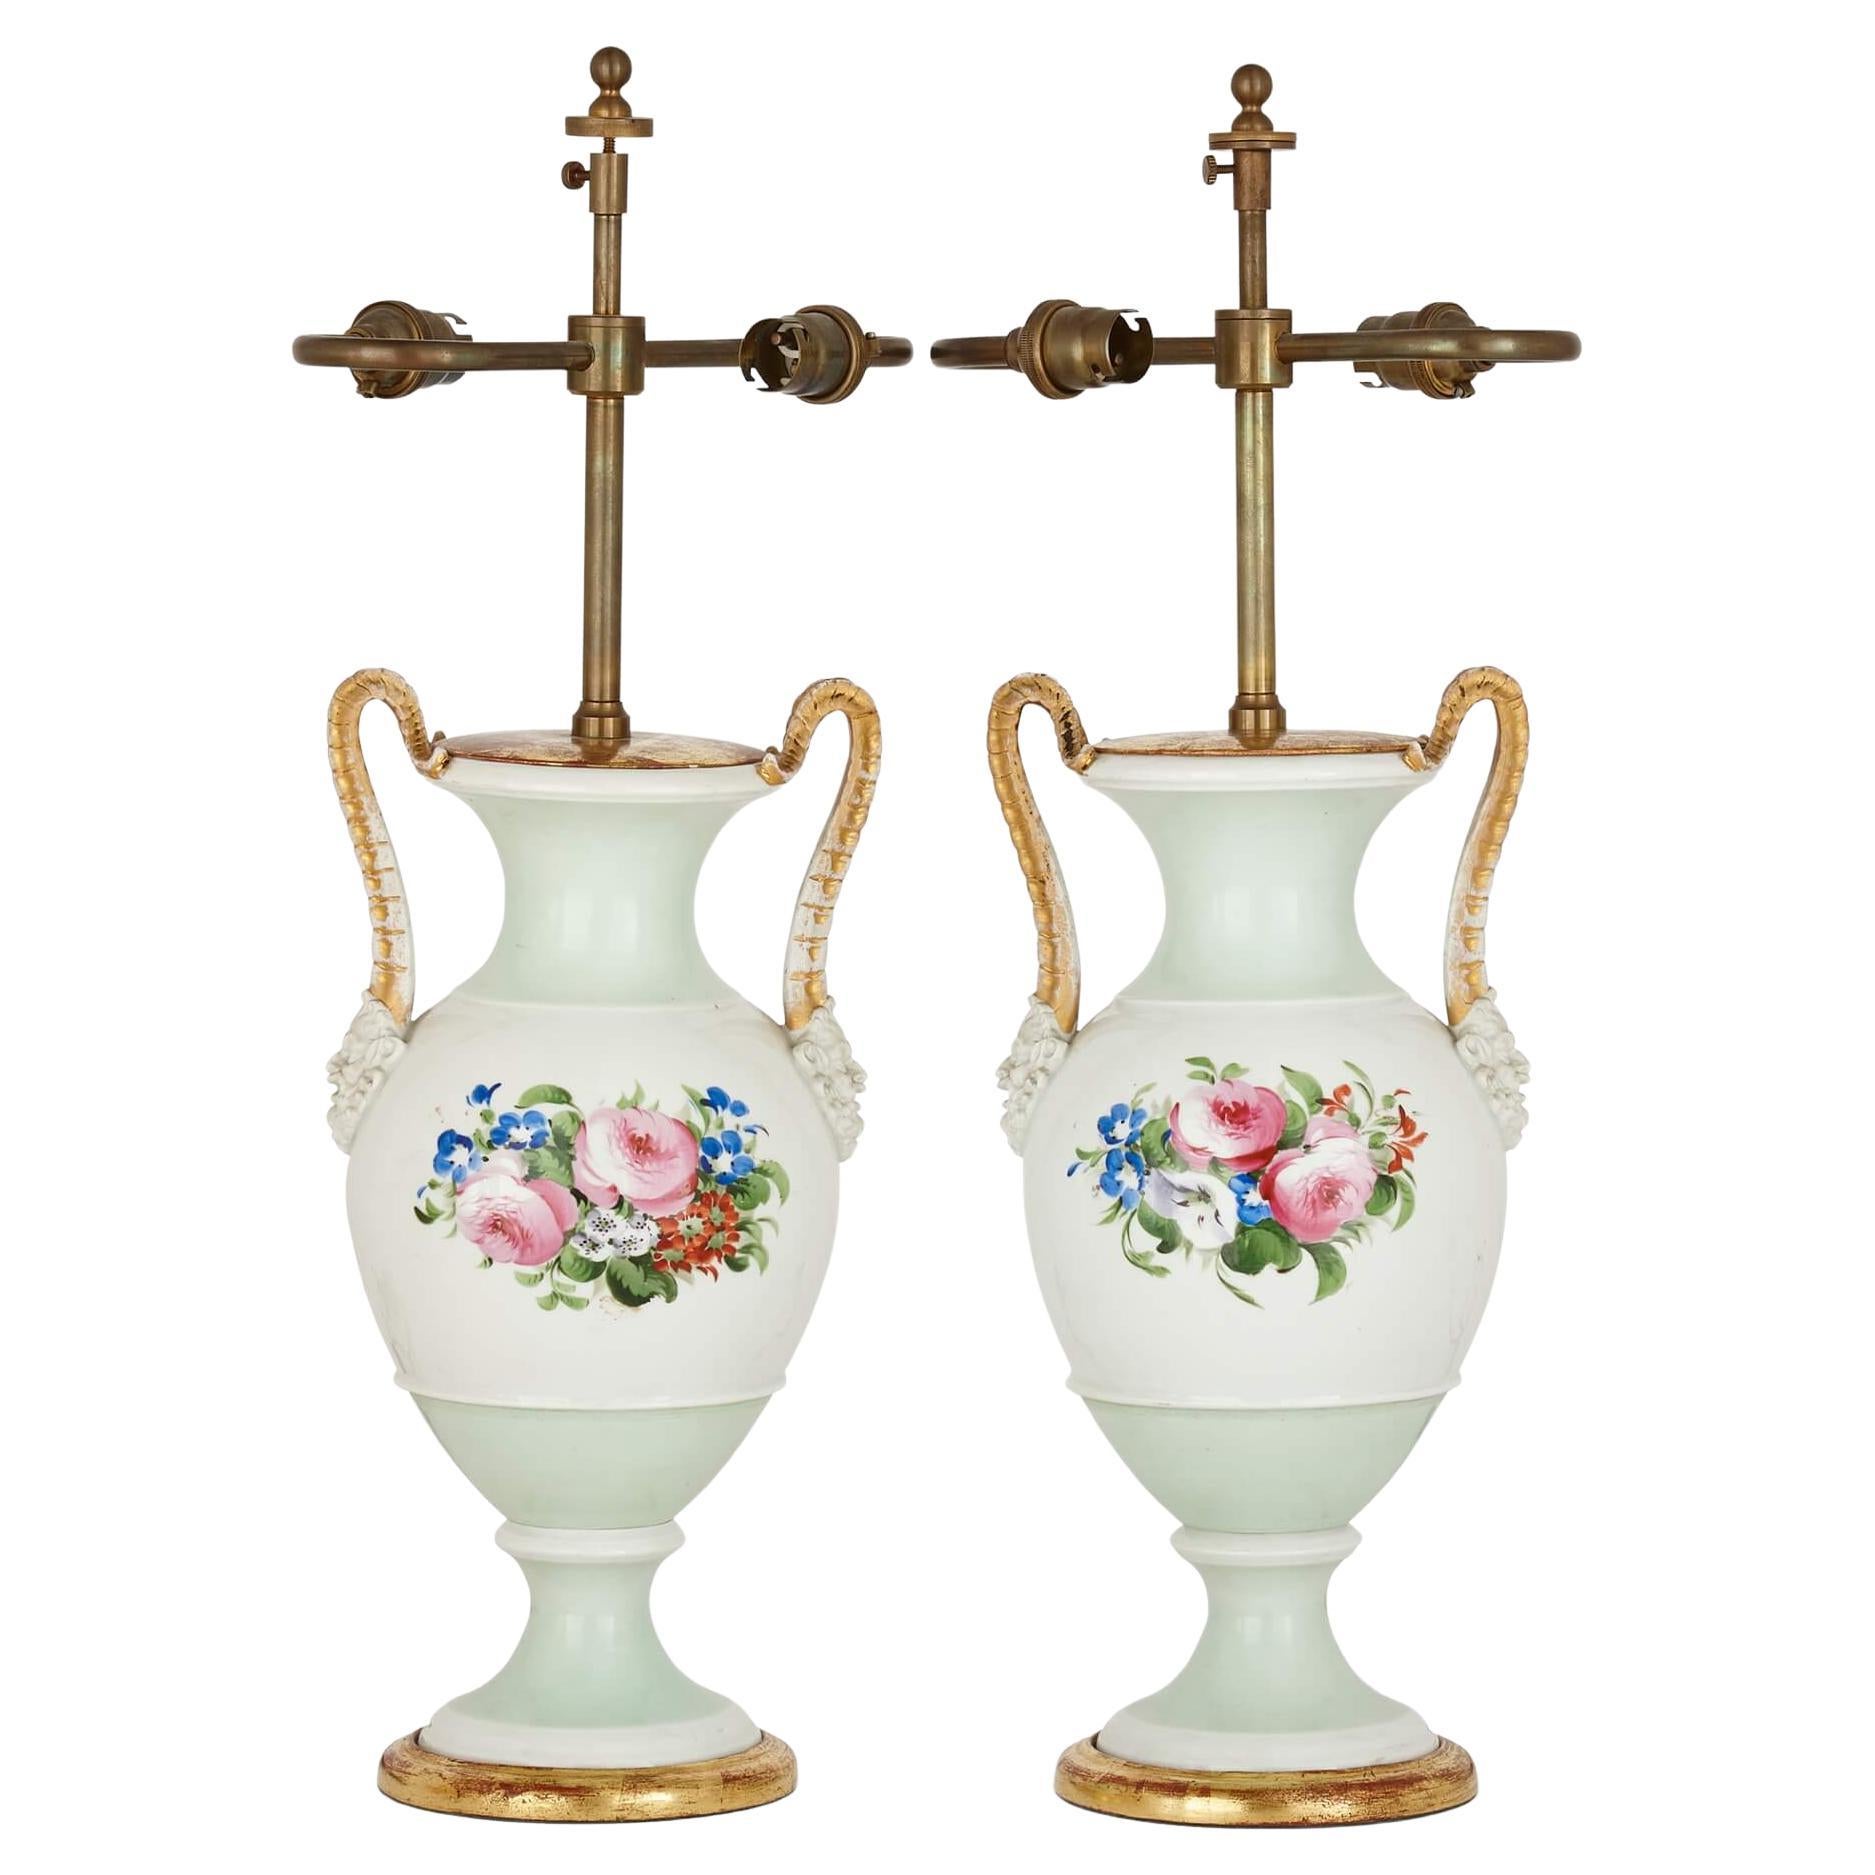 Pair of Antique Porcelain Vase-Form Lamps with Floral Decoration For Sale